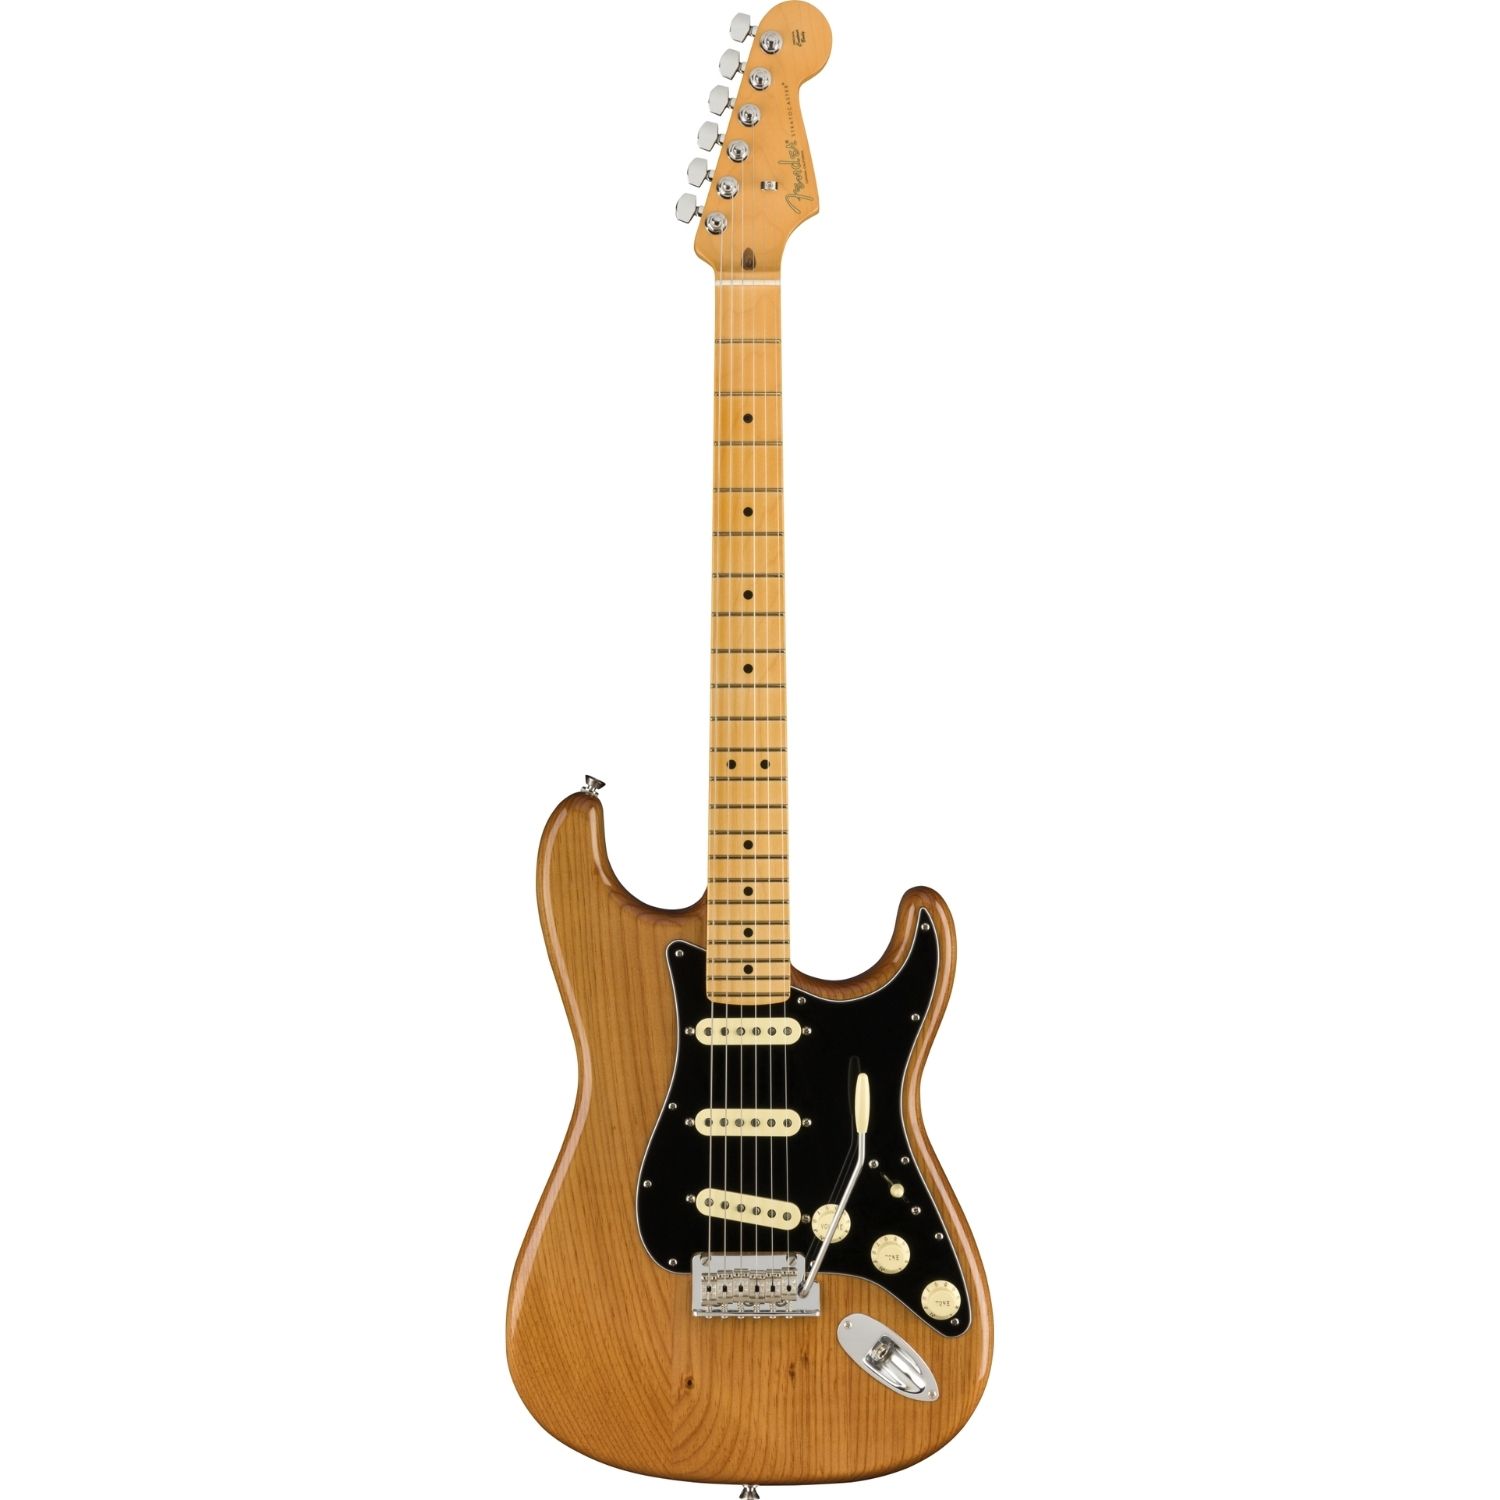 Fender AM Pro II Strat online price in India2111